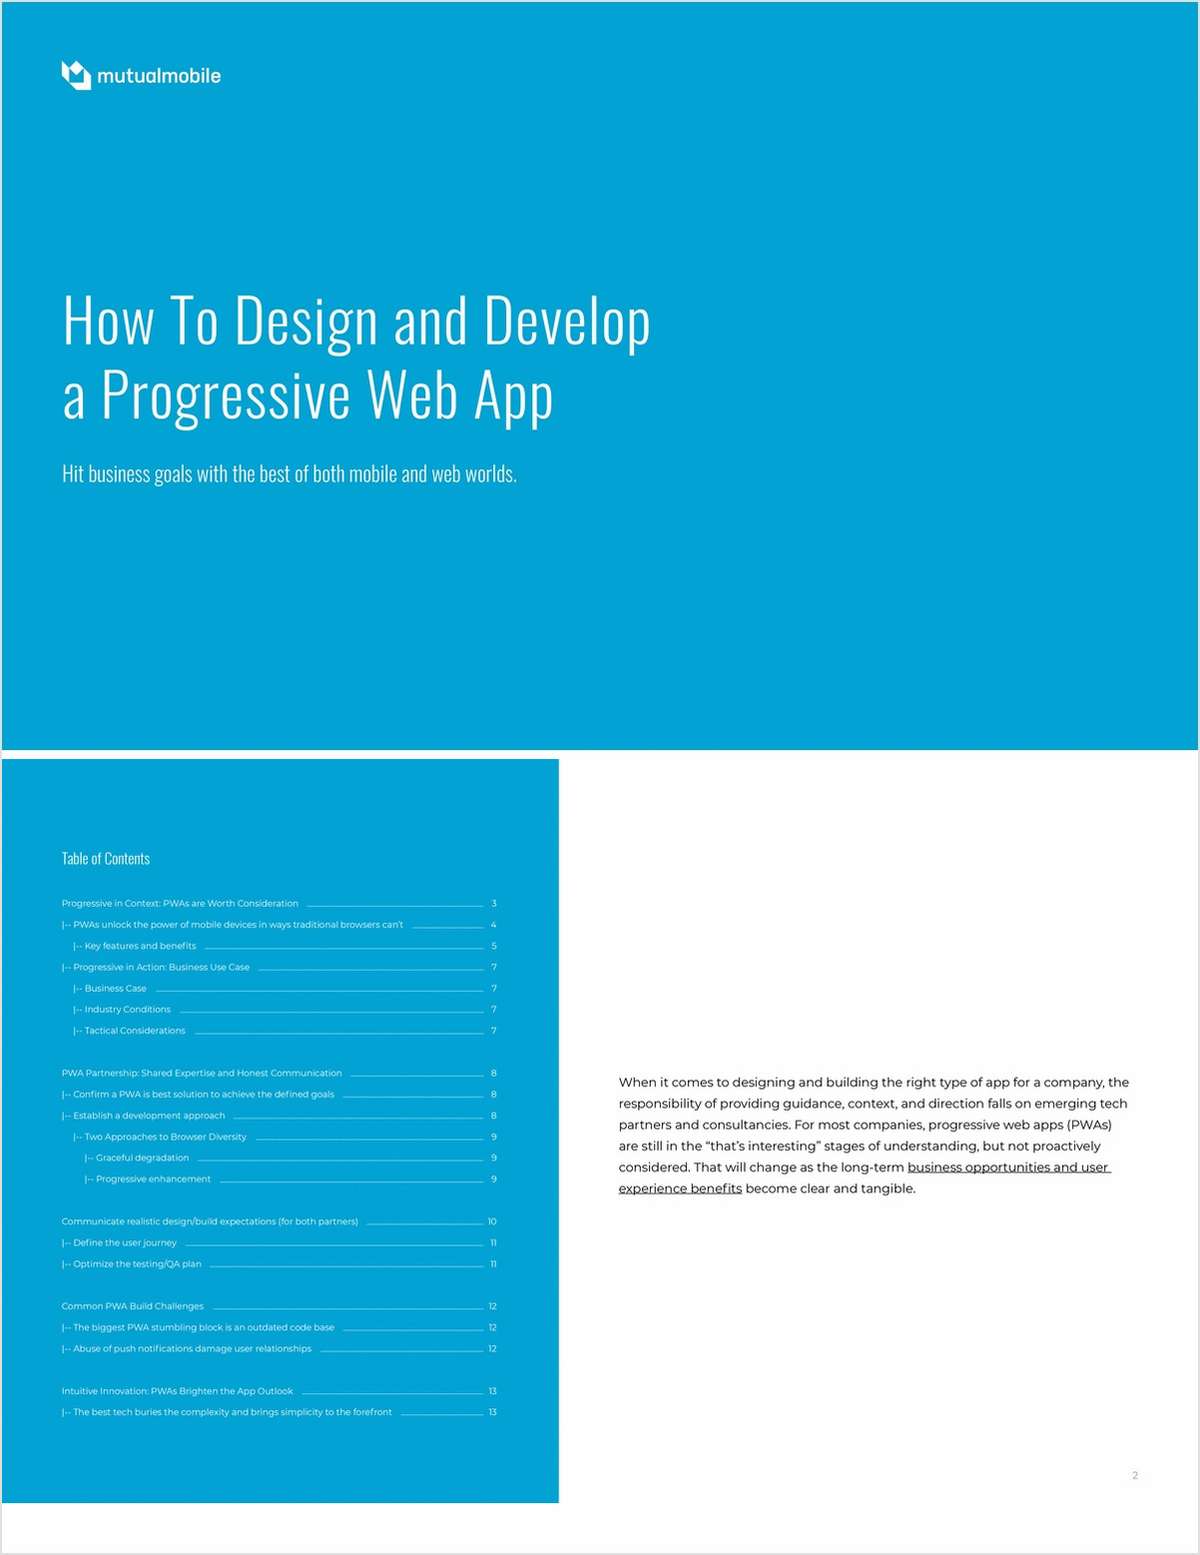 How To Design and Develop a Progressive Web App